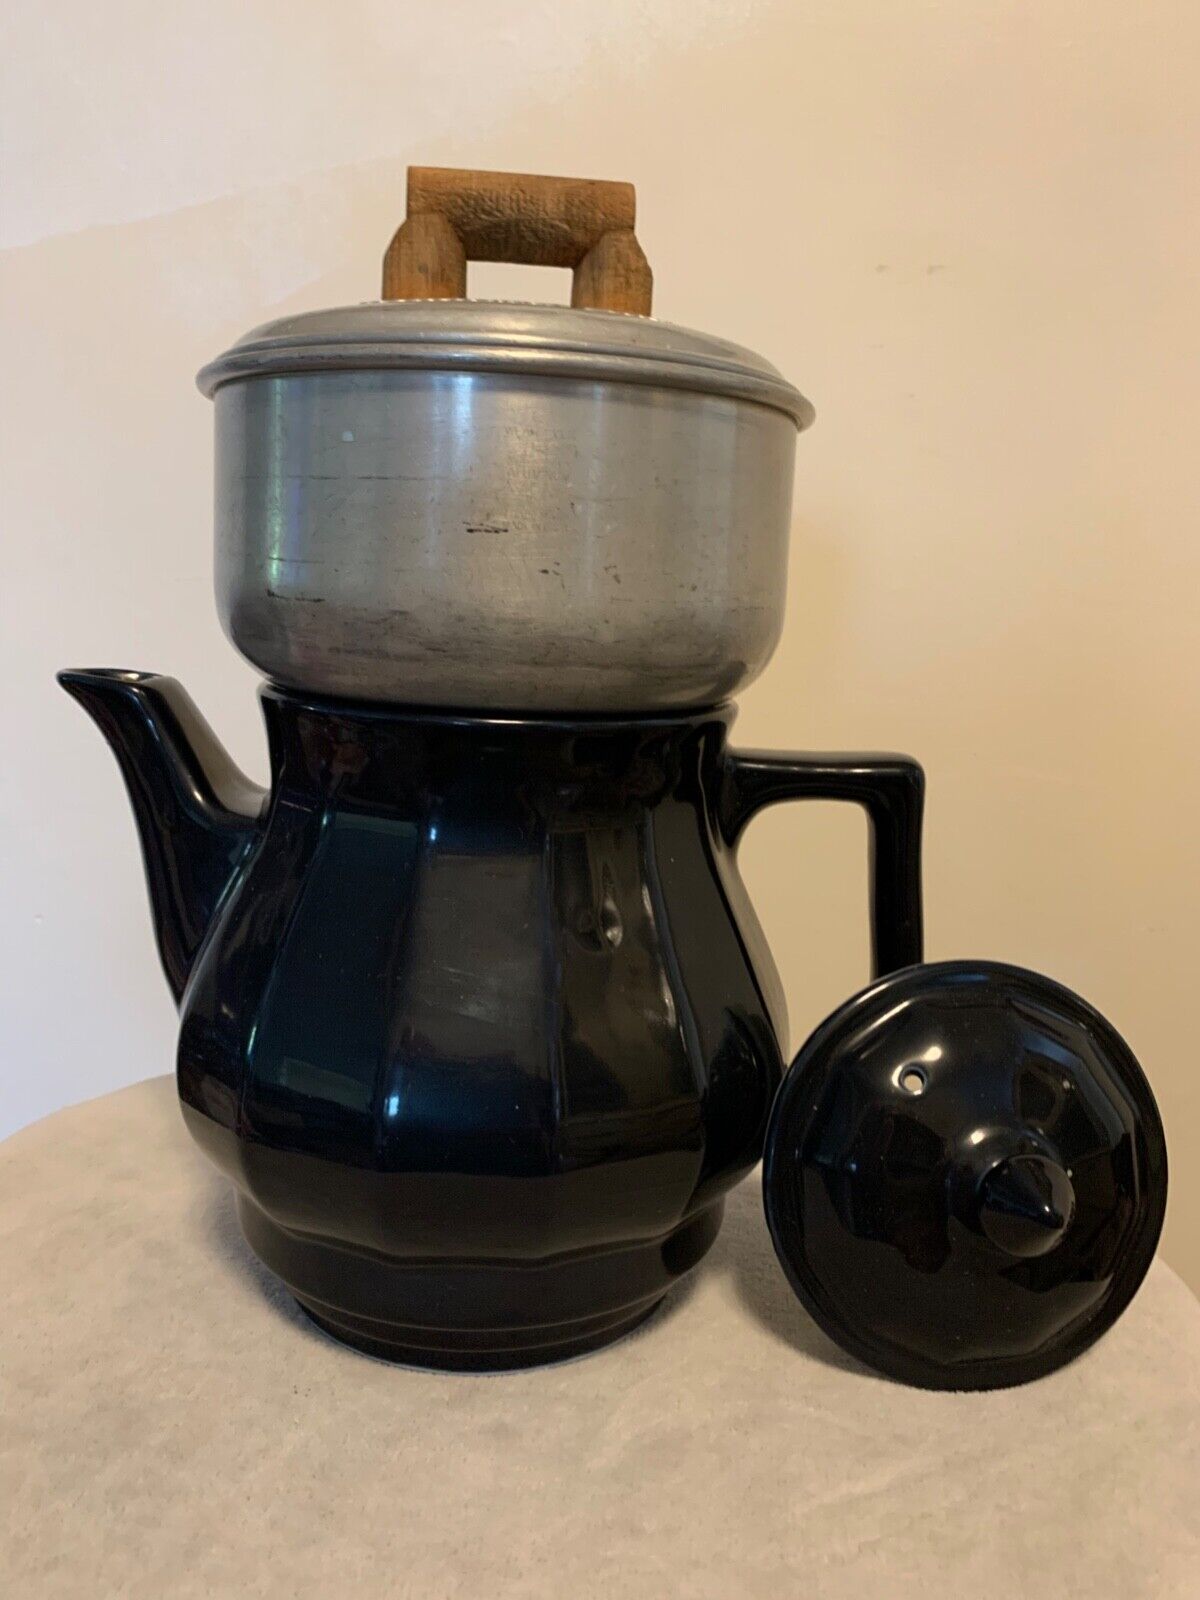 Ben-Hur Deluxe Coffee Pot With Filco Coffee Maker Drip & Filters 1930s Rare 